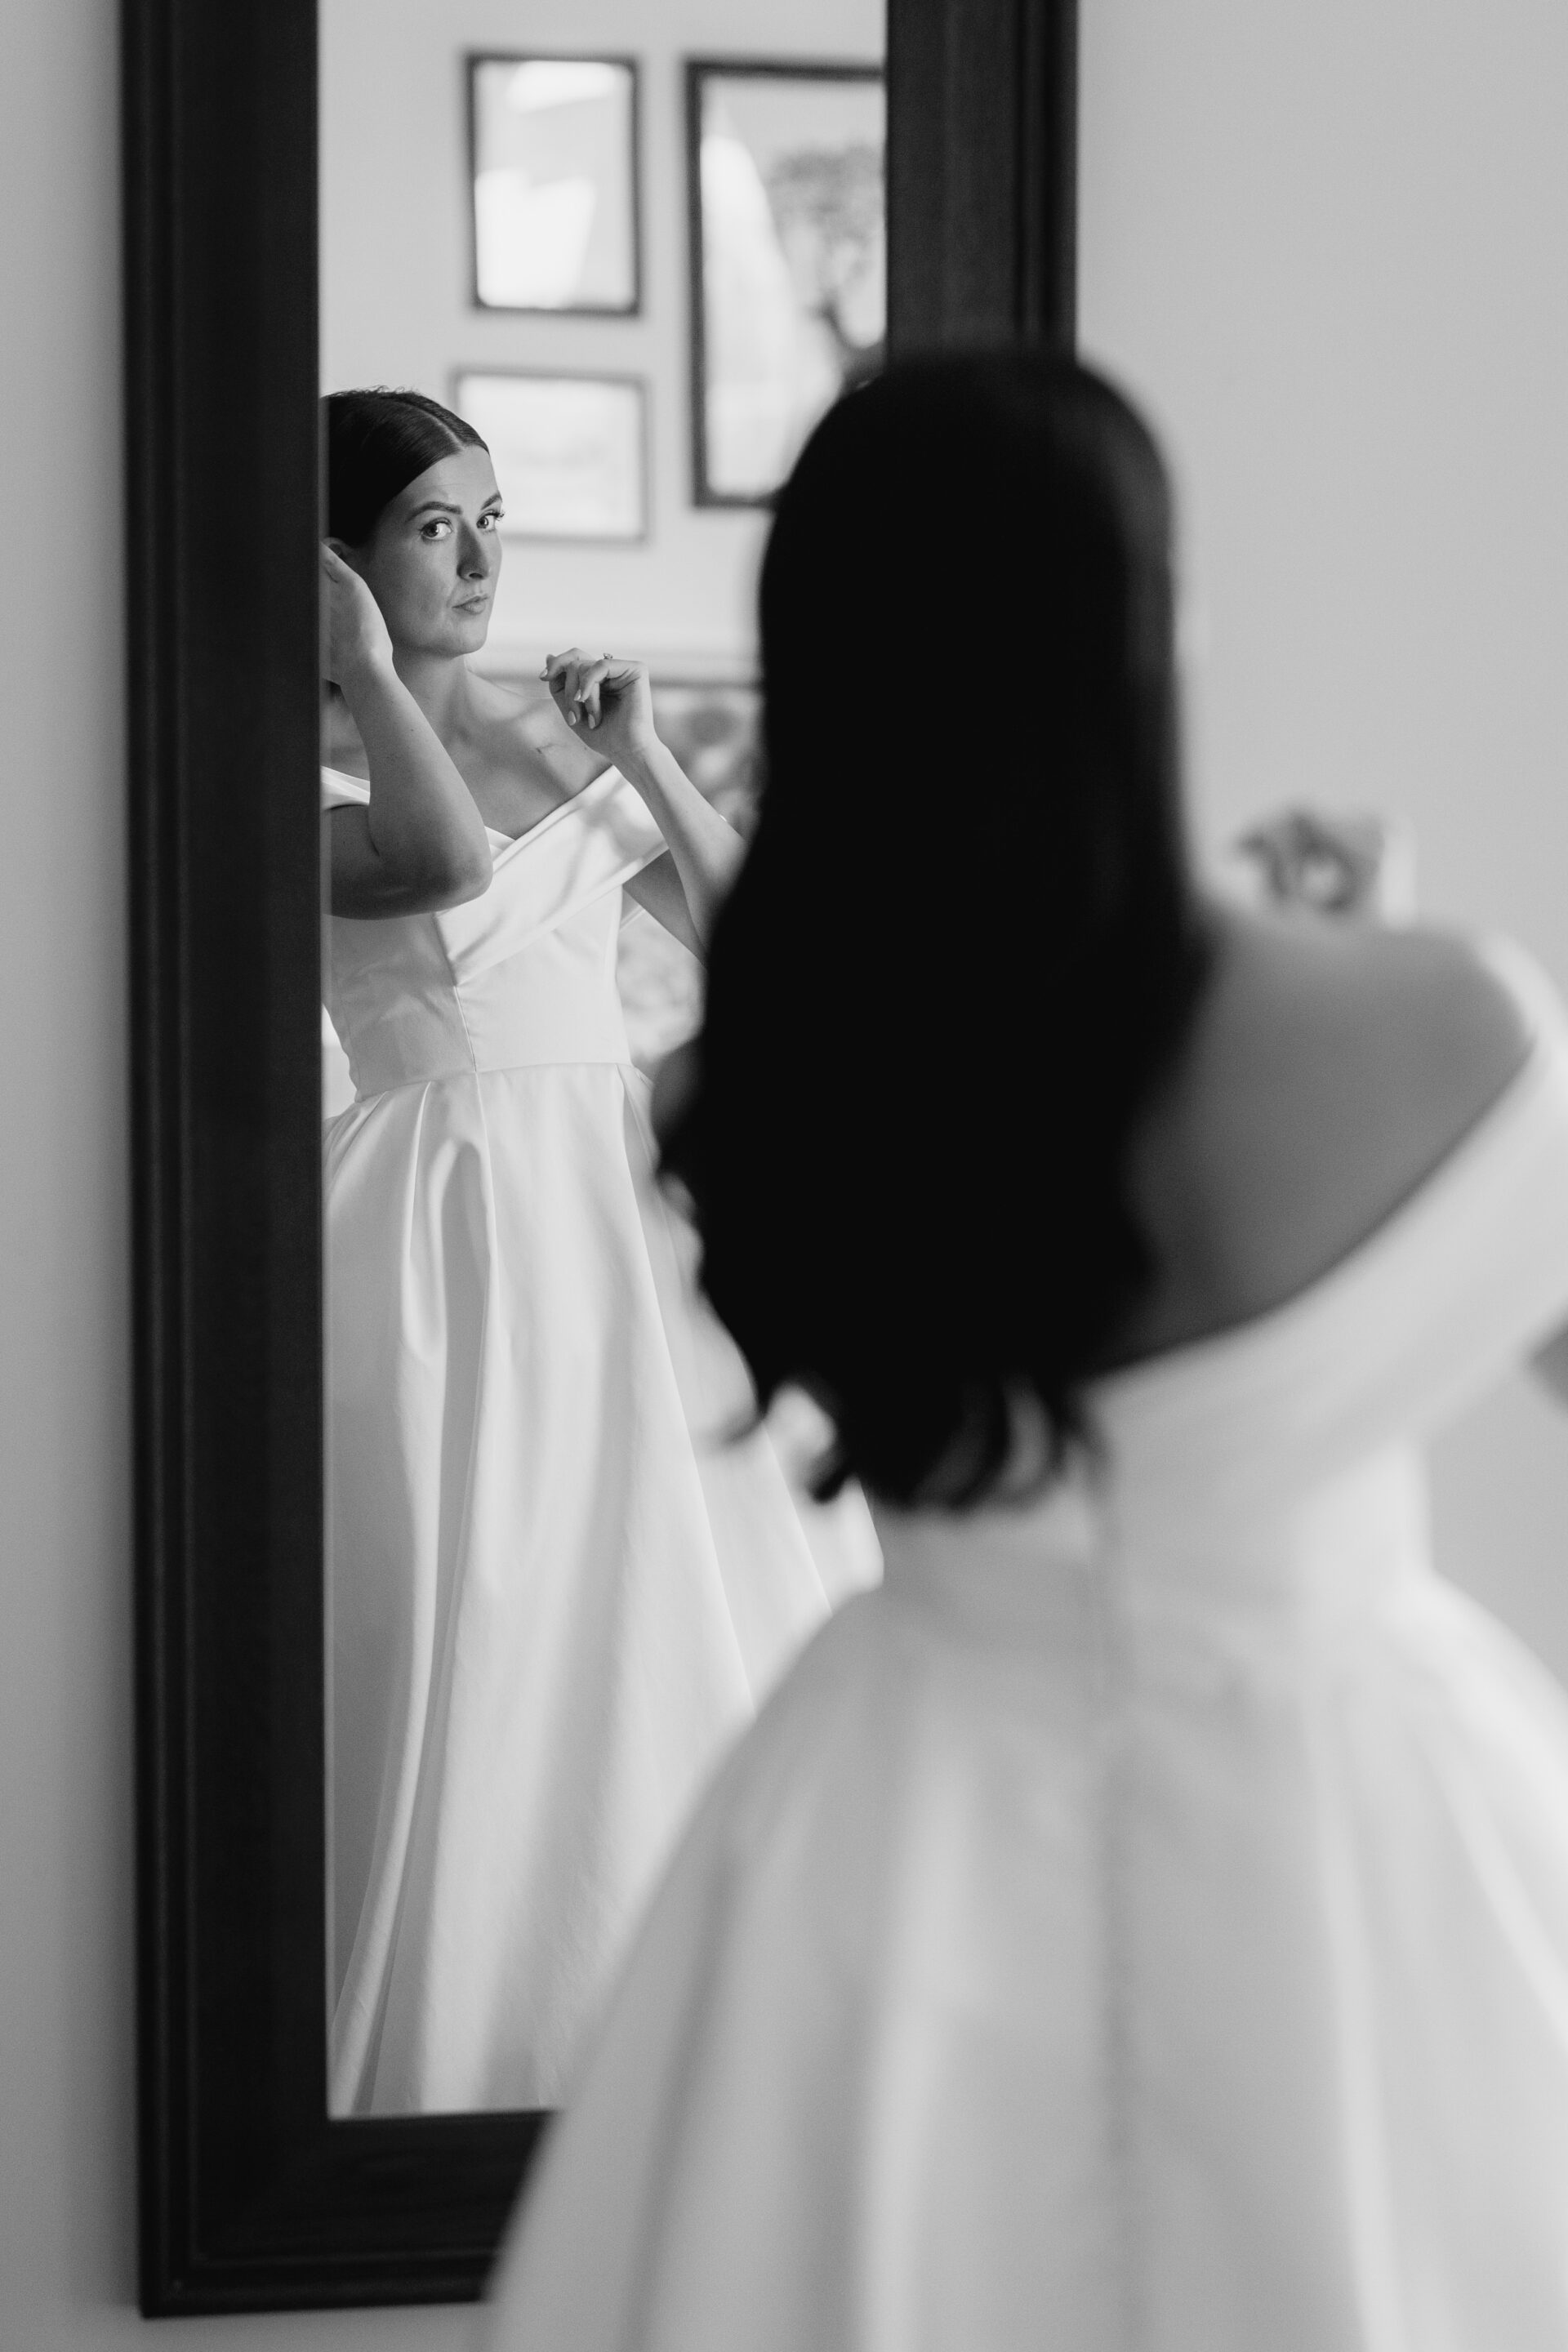 The bride surveys her reflection during bridal prep at Tortworth Court